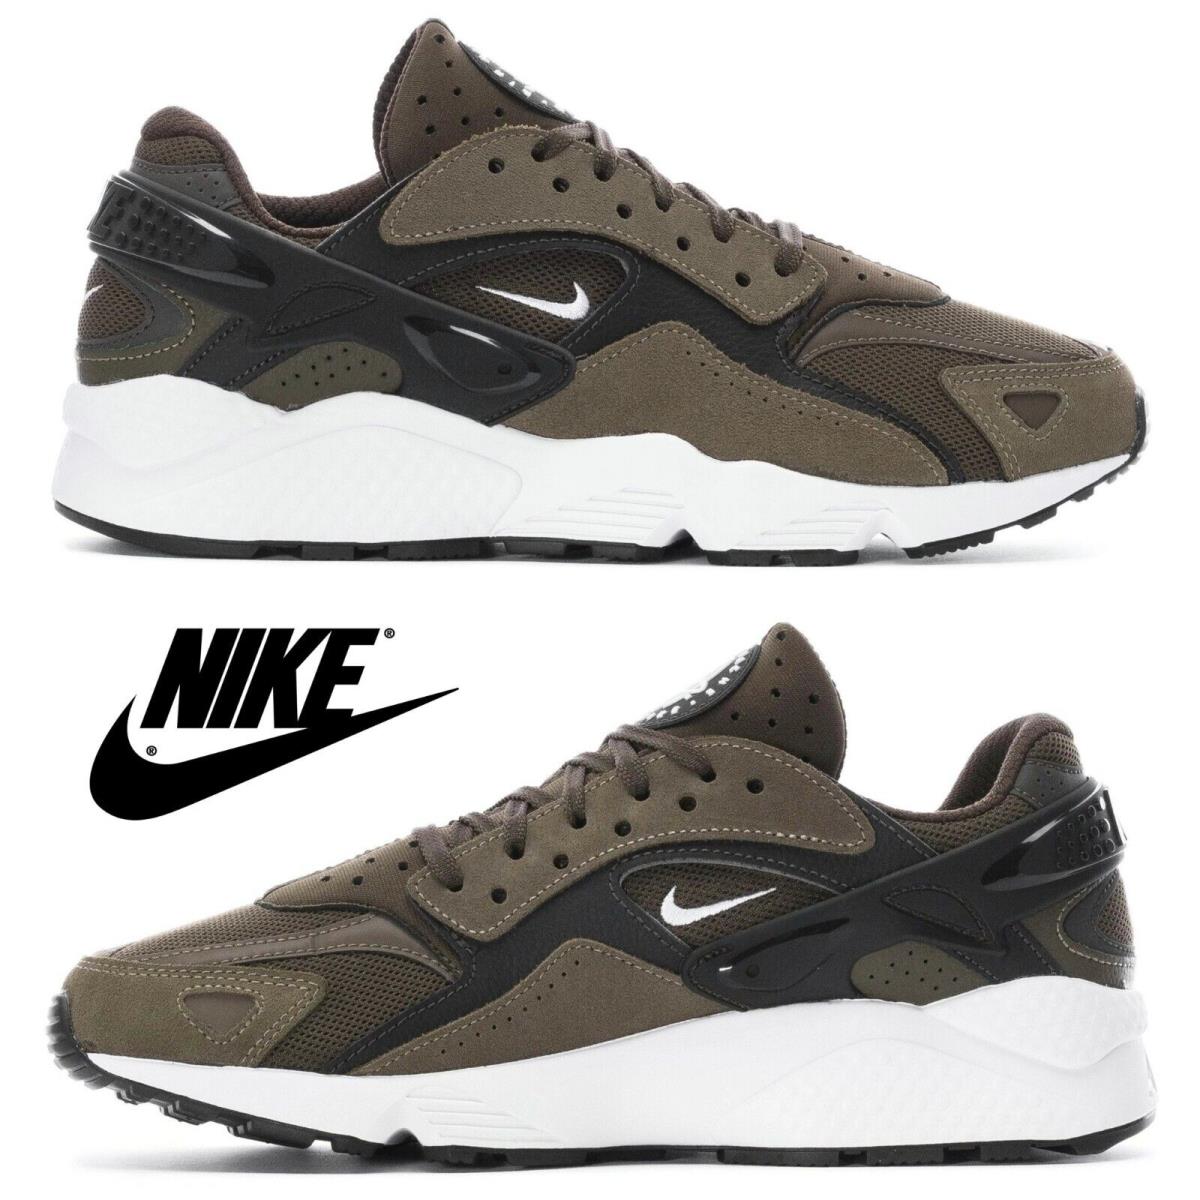 Nike Air Huarache Runner Men`s Casual Shoes Running Athletic Comfort Sport Khaki - Green, Manufacturer: Cargo Khaki/White/Medium Olive/Sequoia